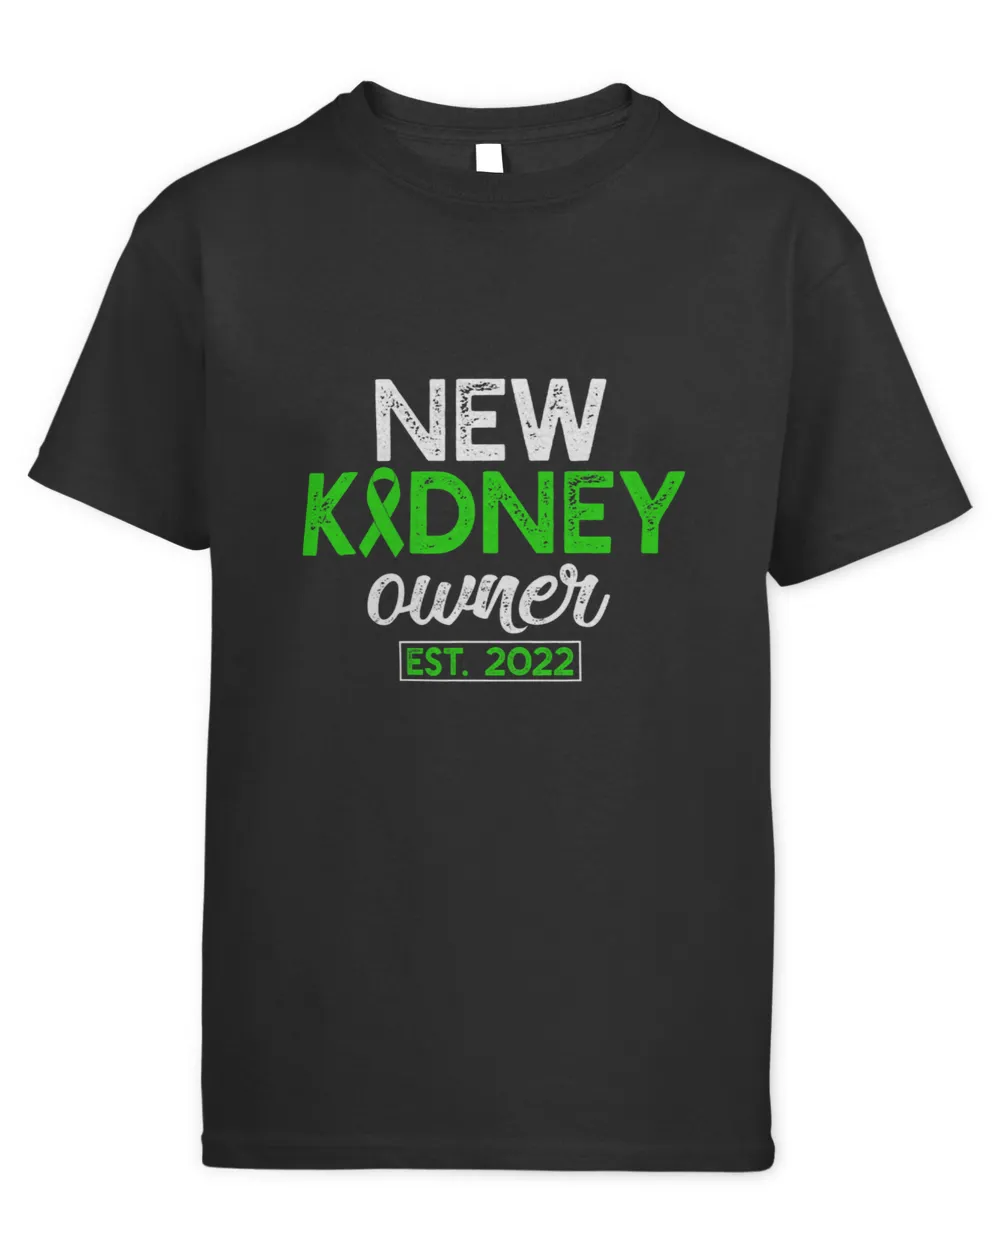 New Kidney Owner Kidney Transplant Organ Recipient